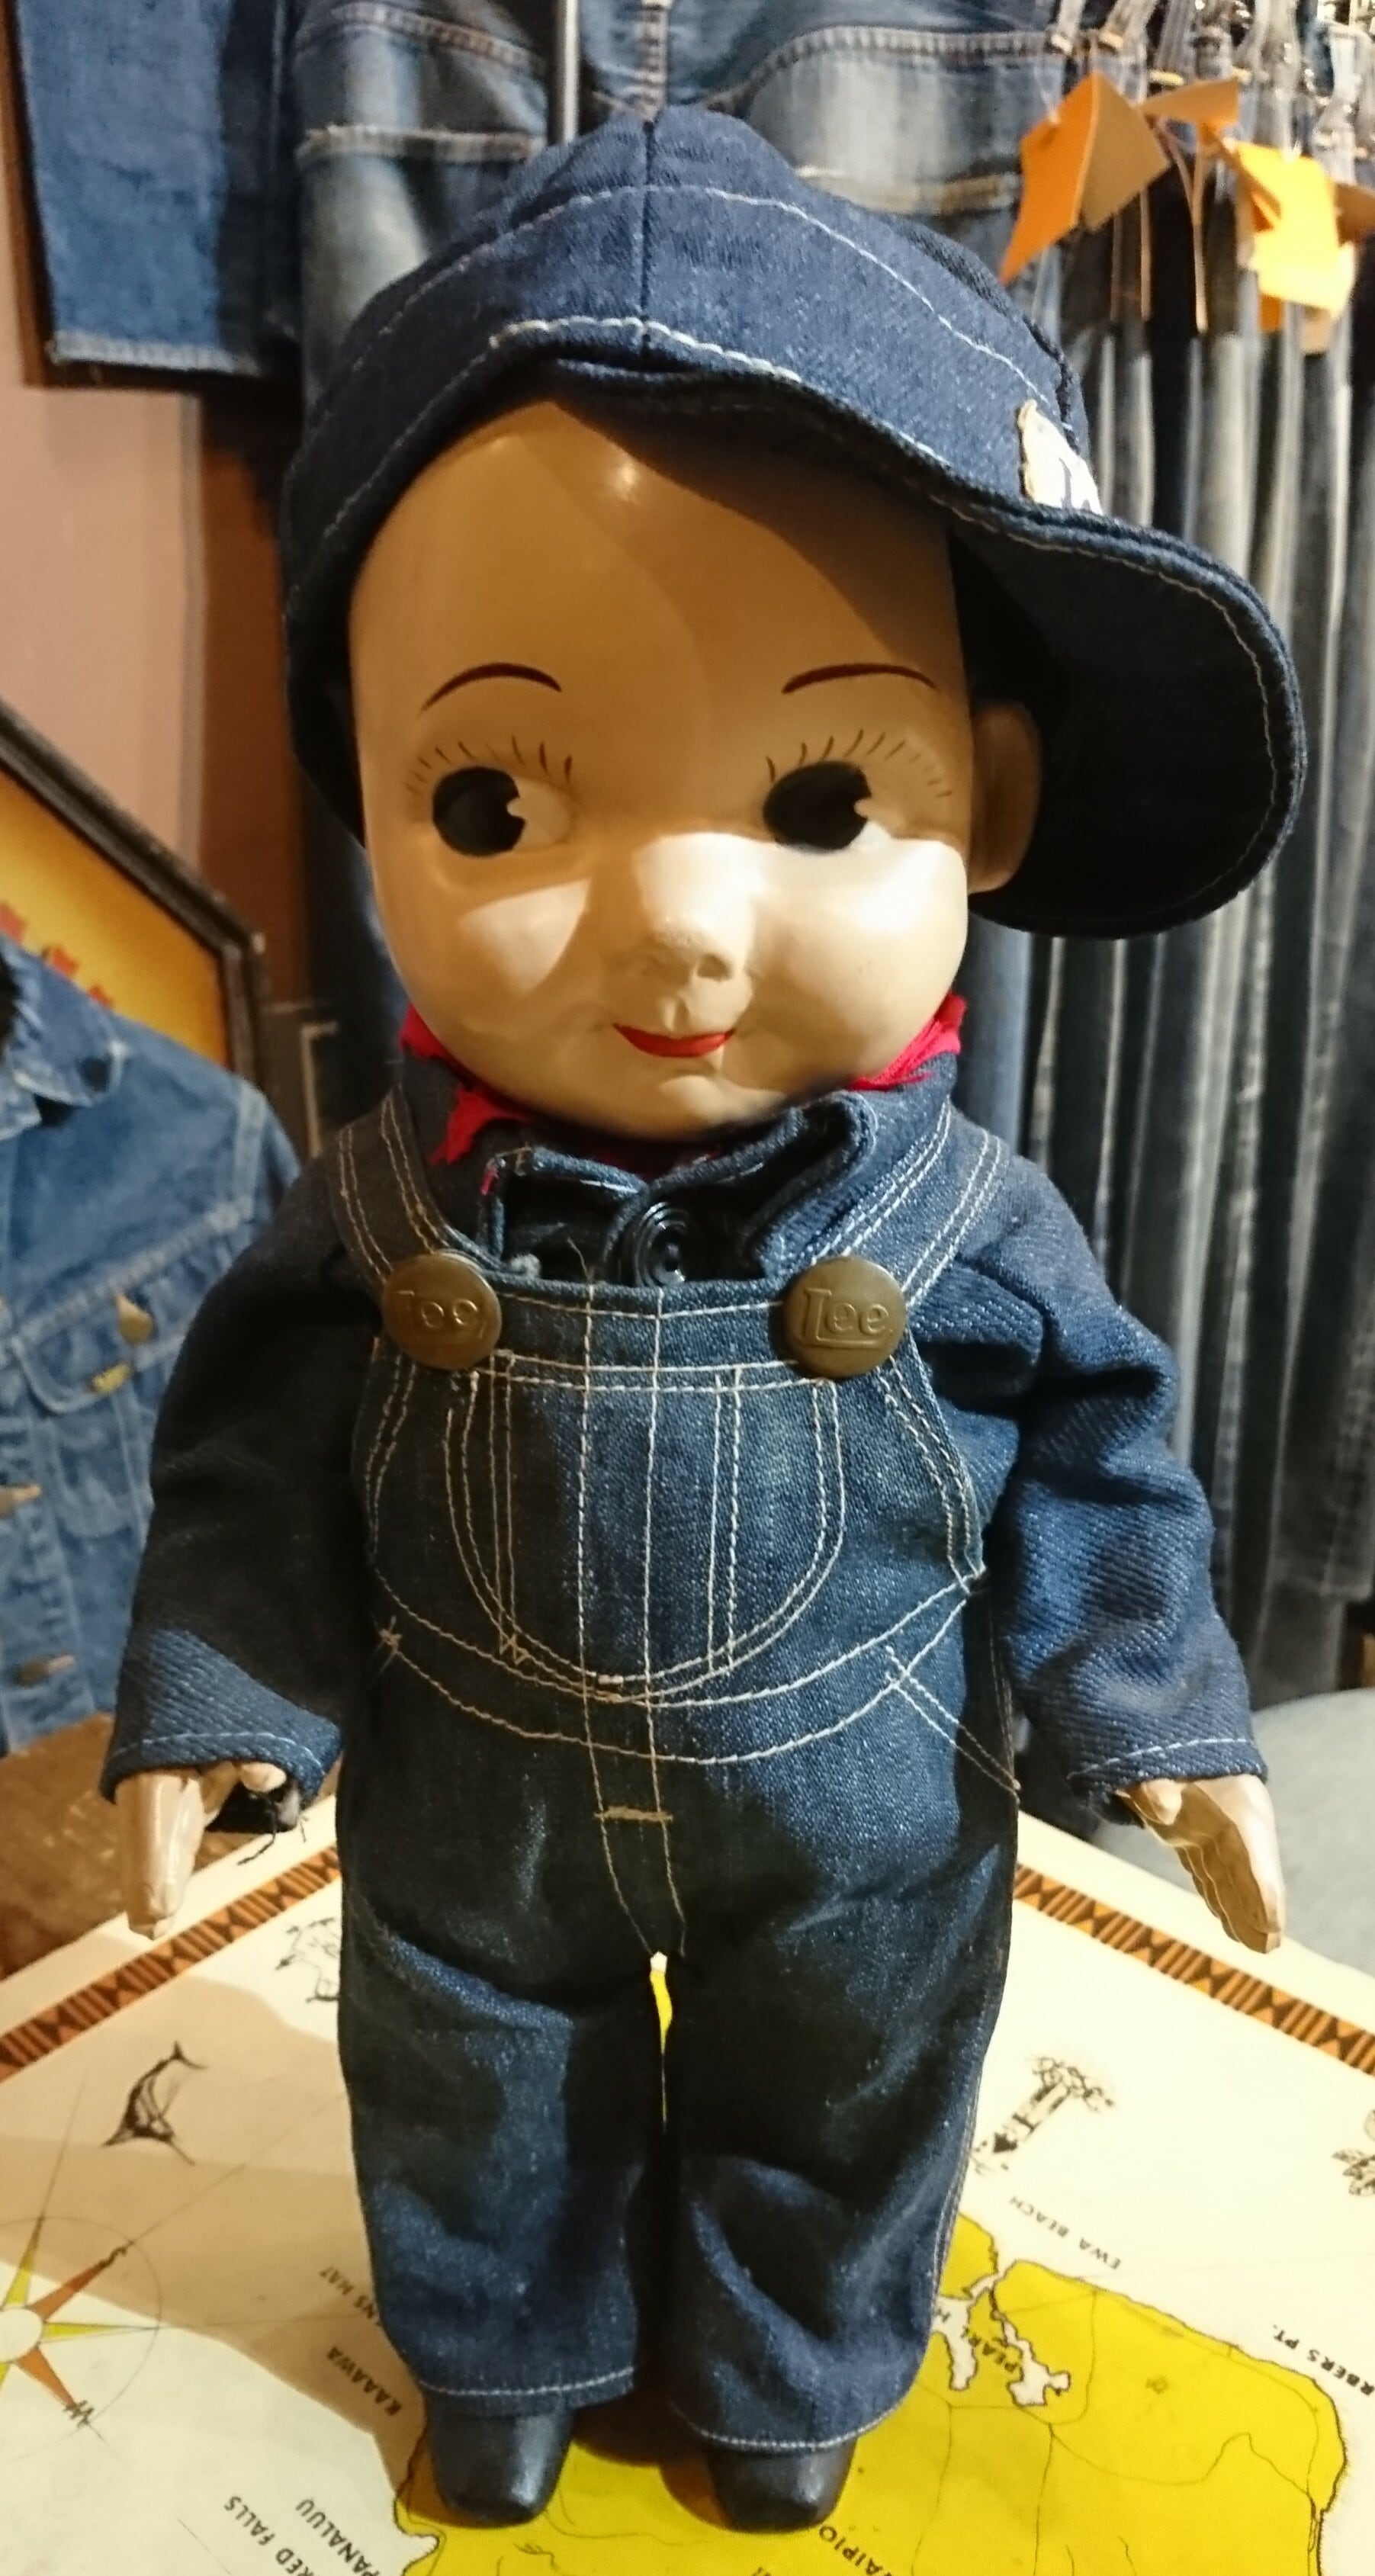 Vintage buddy lee doll ヴィンテージ バディリー人形 - アンティーク雑貨